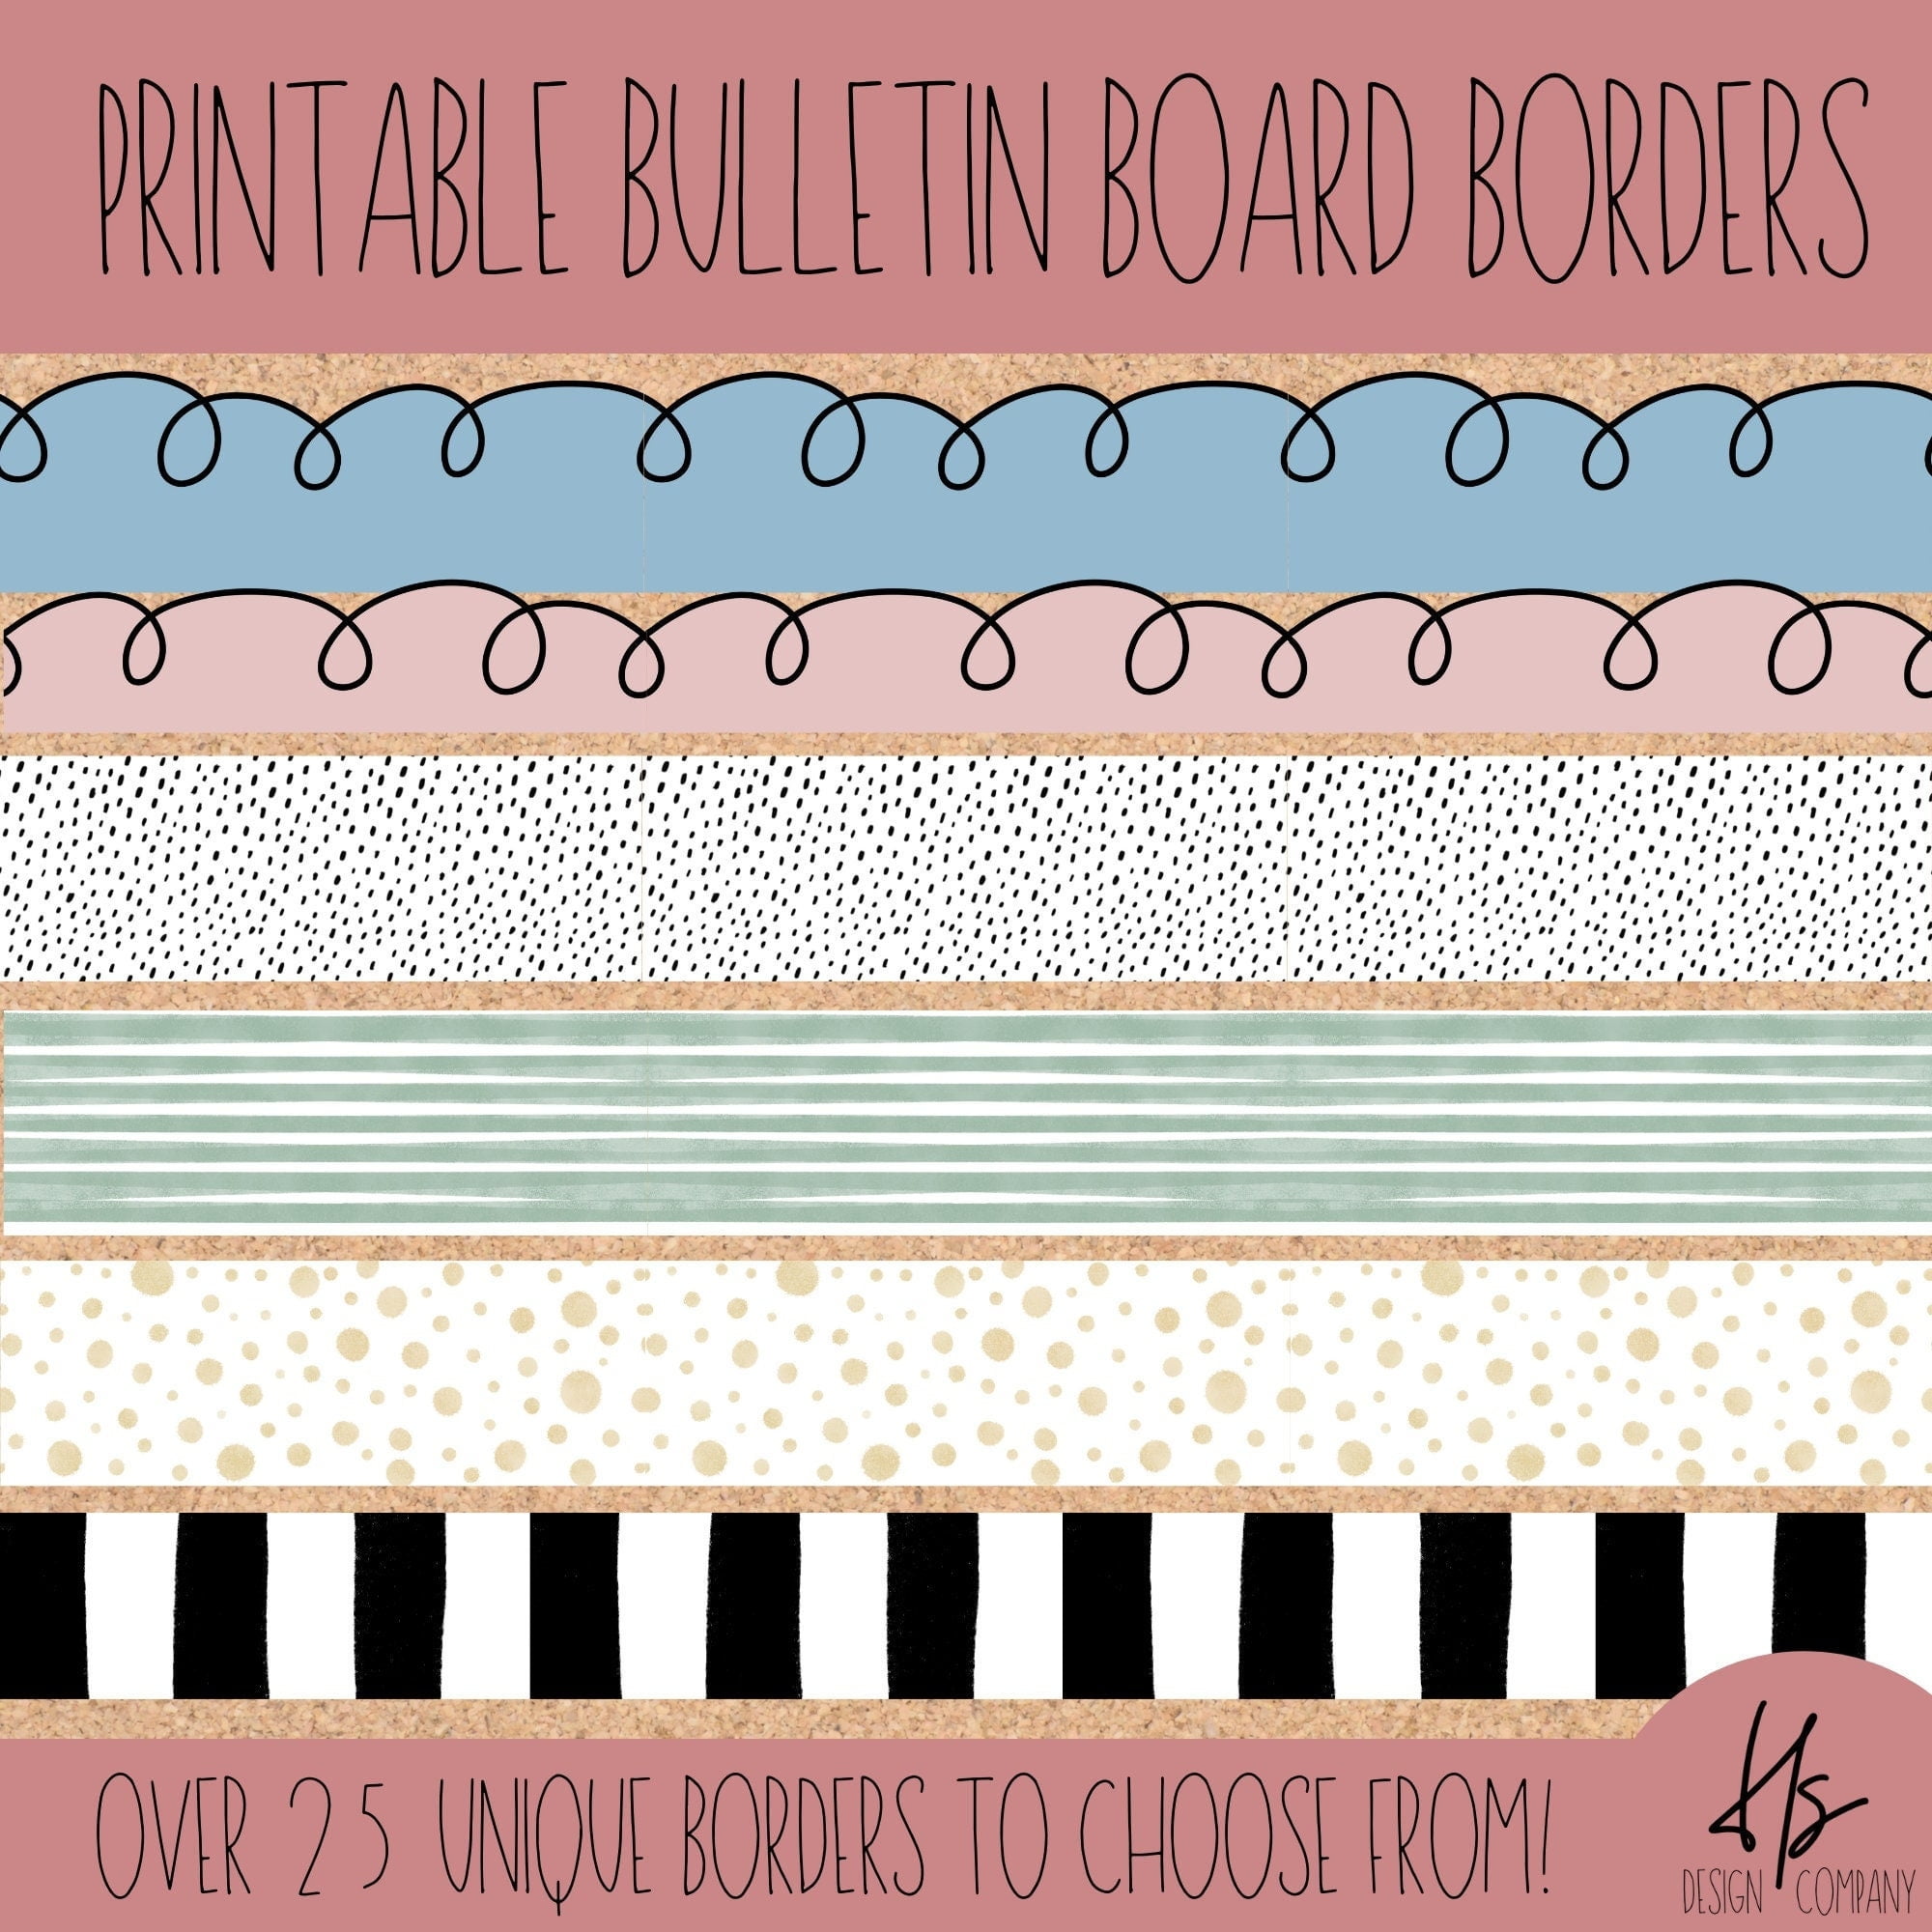 printable-bulletin-board-borders-free-printable-templates